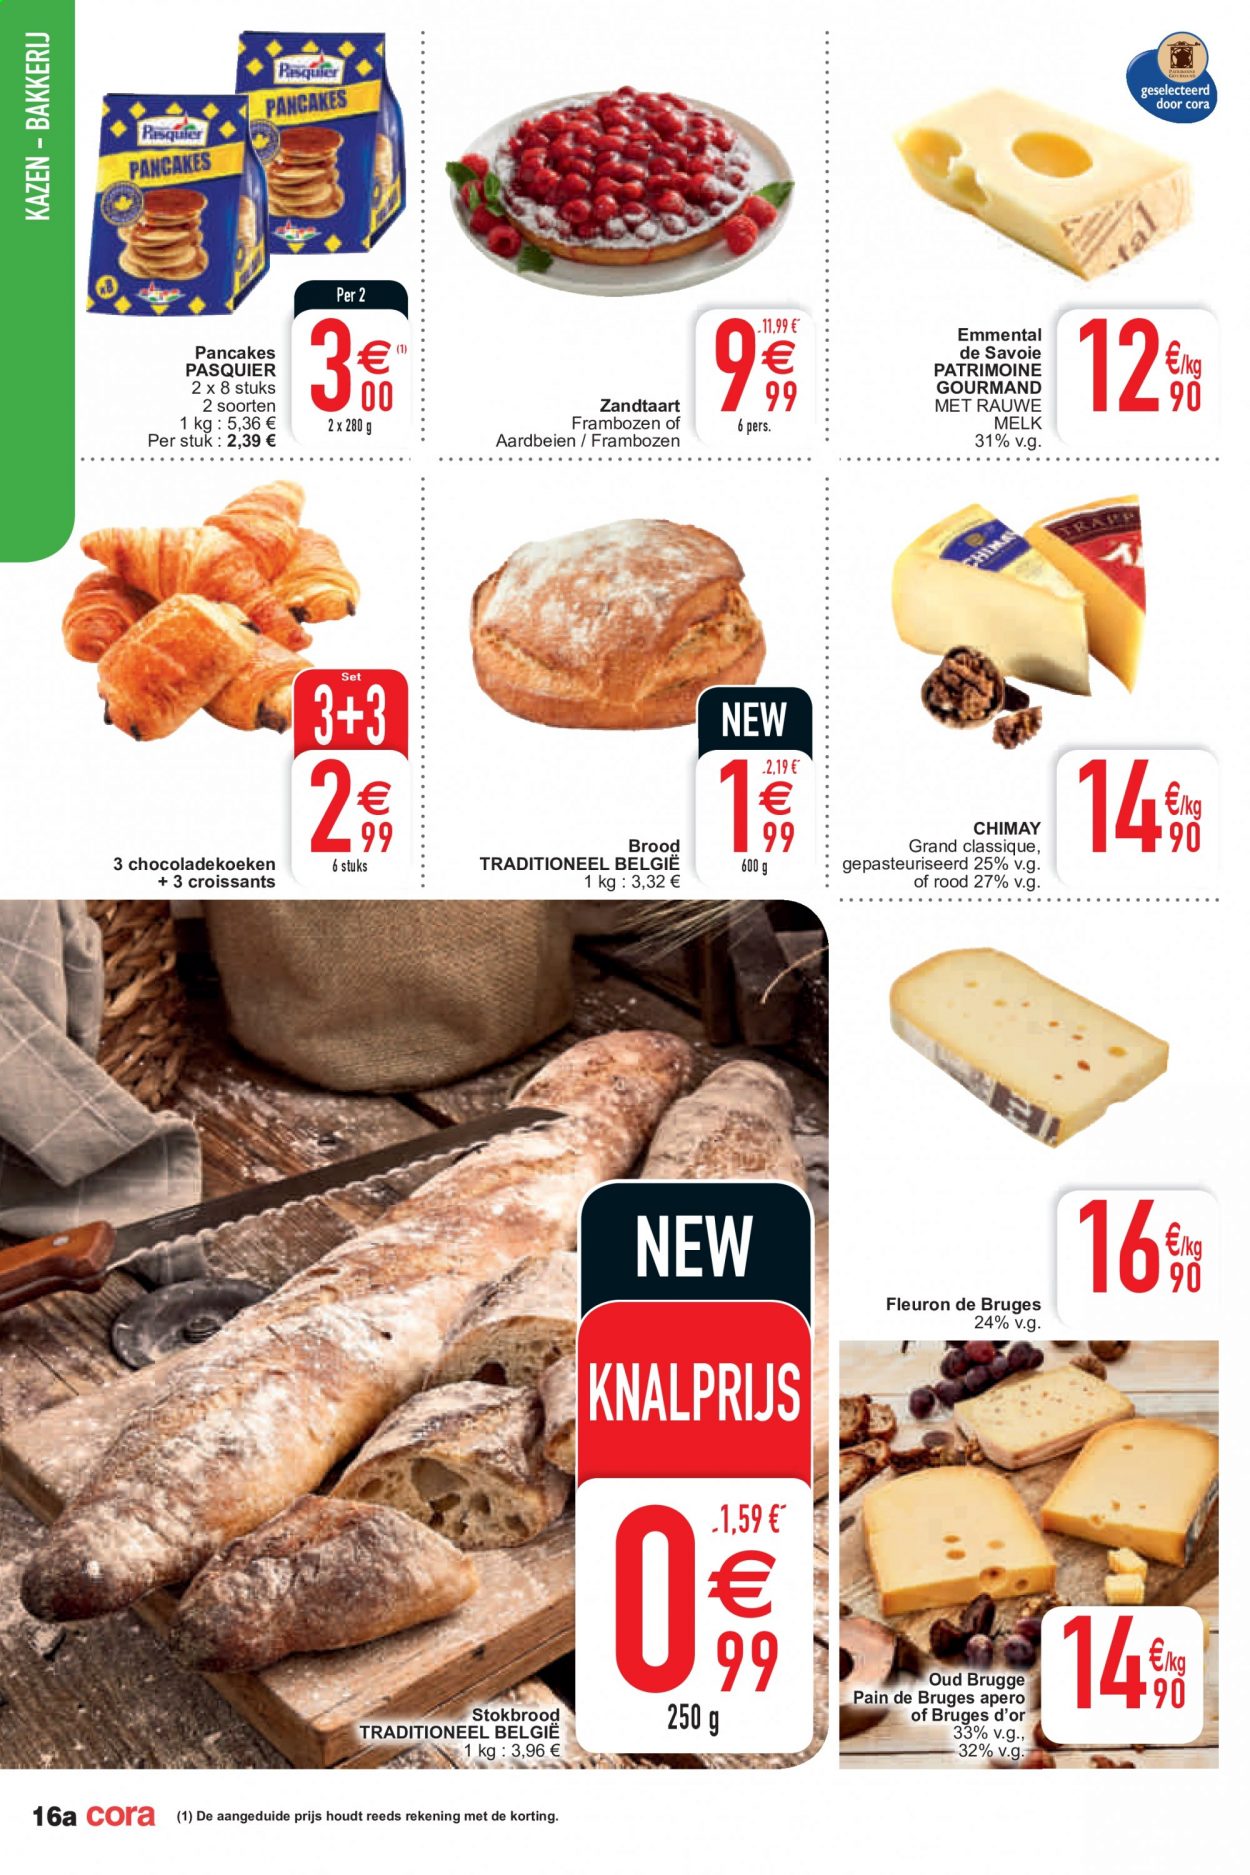 thumbnail - Cora-aanbieding - 06/07/2021 - 12/07/2021 -  producten in de aanbieding - aardbeien, melk, Oud Brugge, stokbrood, frambozen, brood, croissant, Emmental. Pagina 16.